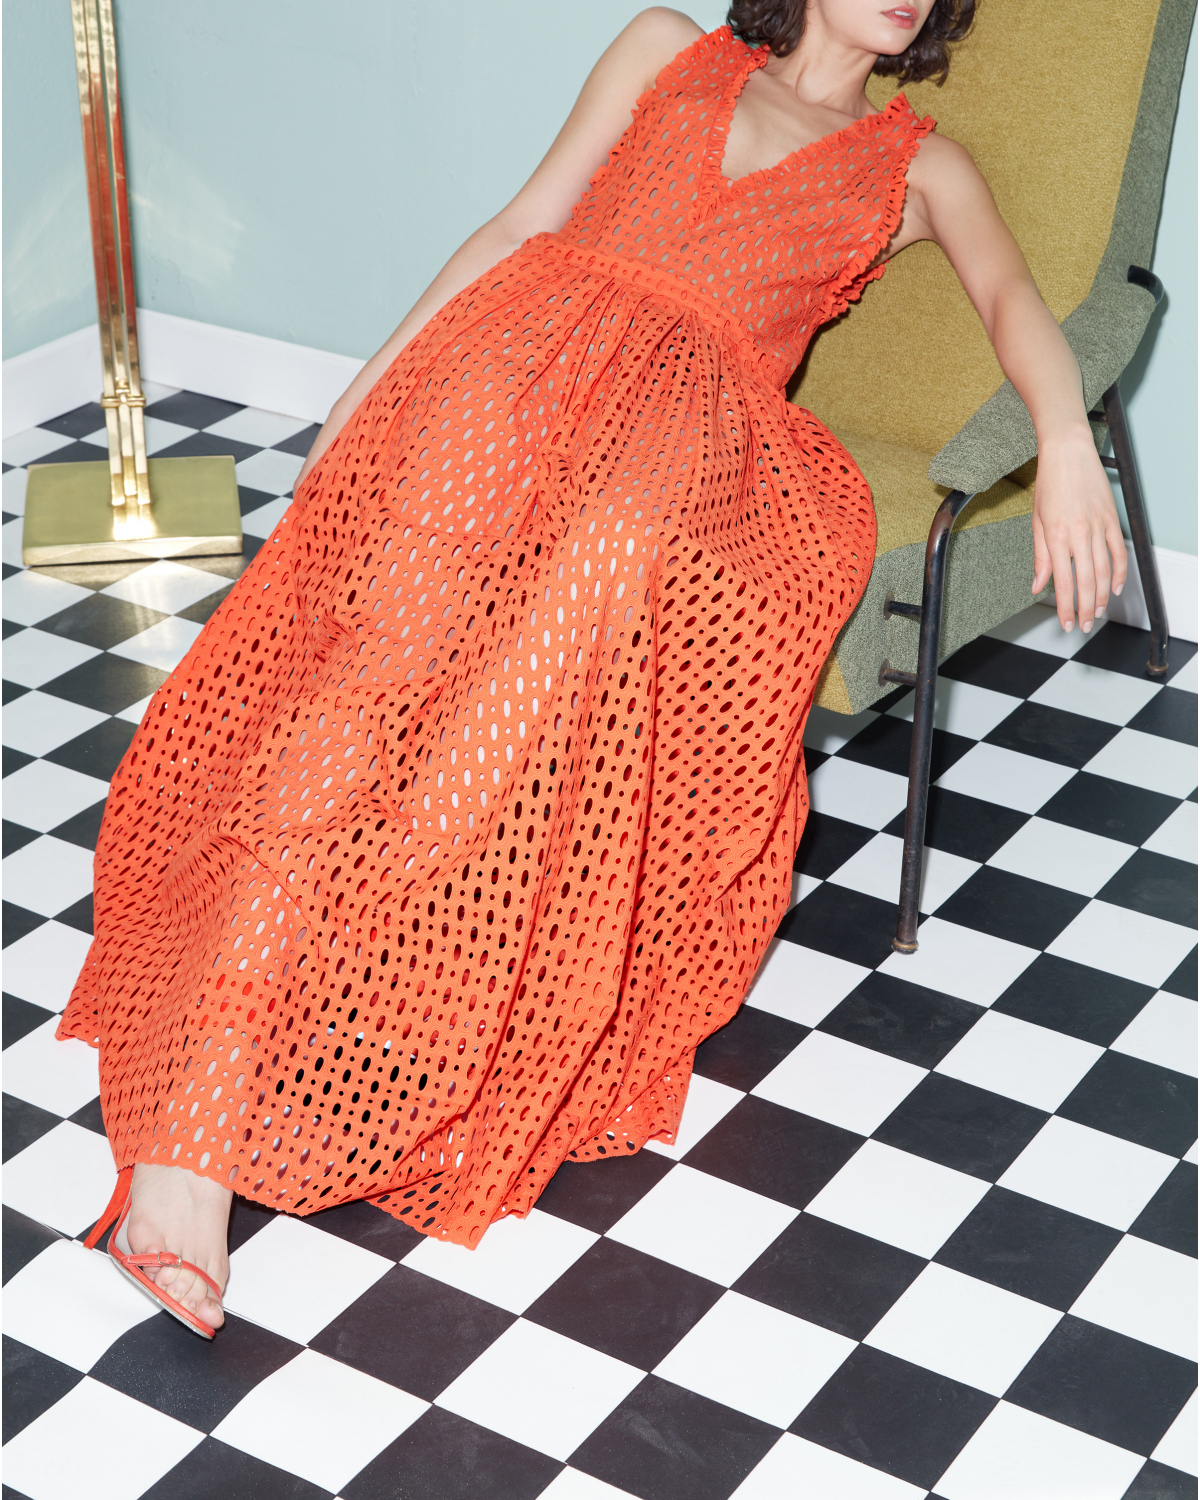 Orange sleeveless maxi dress in sangallo lace | Temporary Flash Sale | Genny